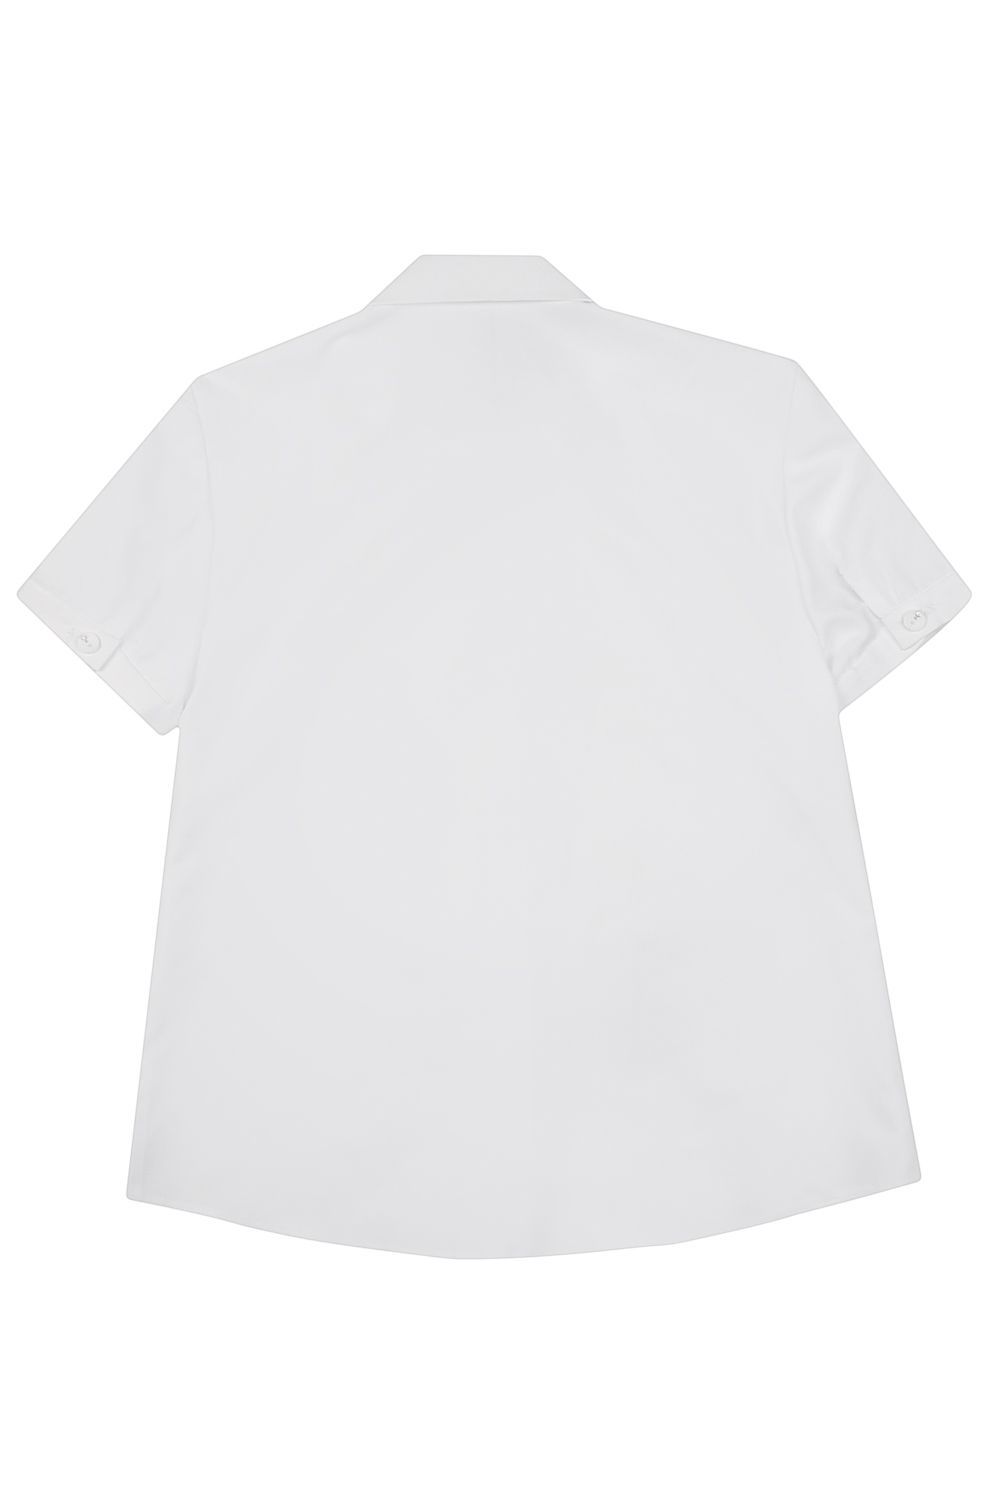 Блуза Noble People, размер 122, цвет белый 29503-350 - фото 3